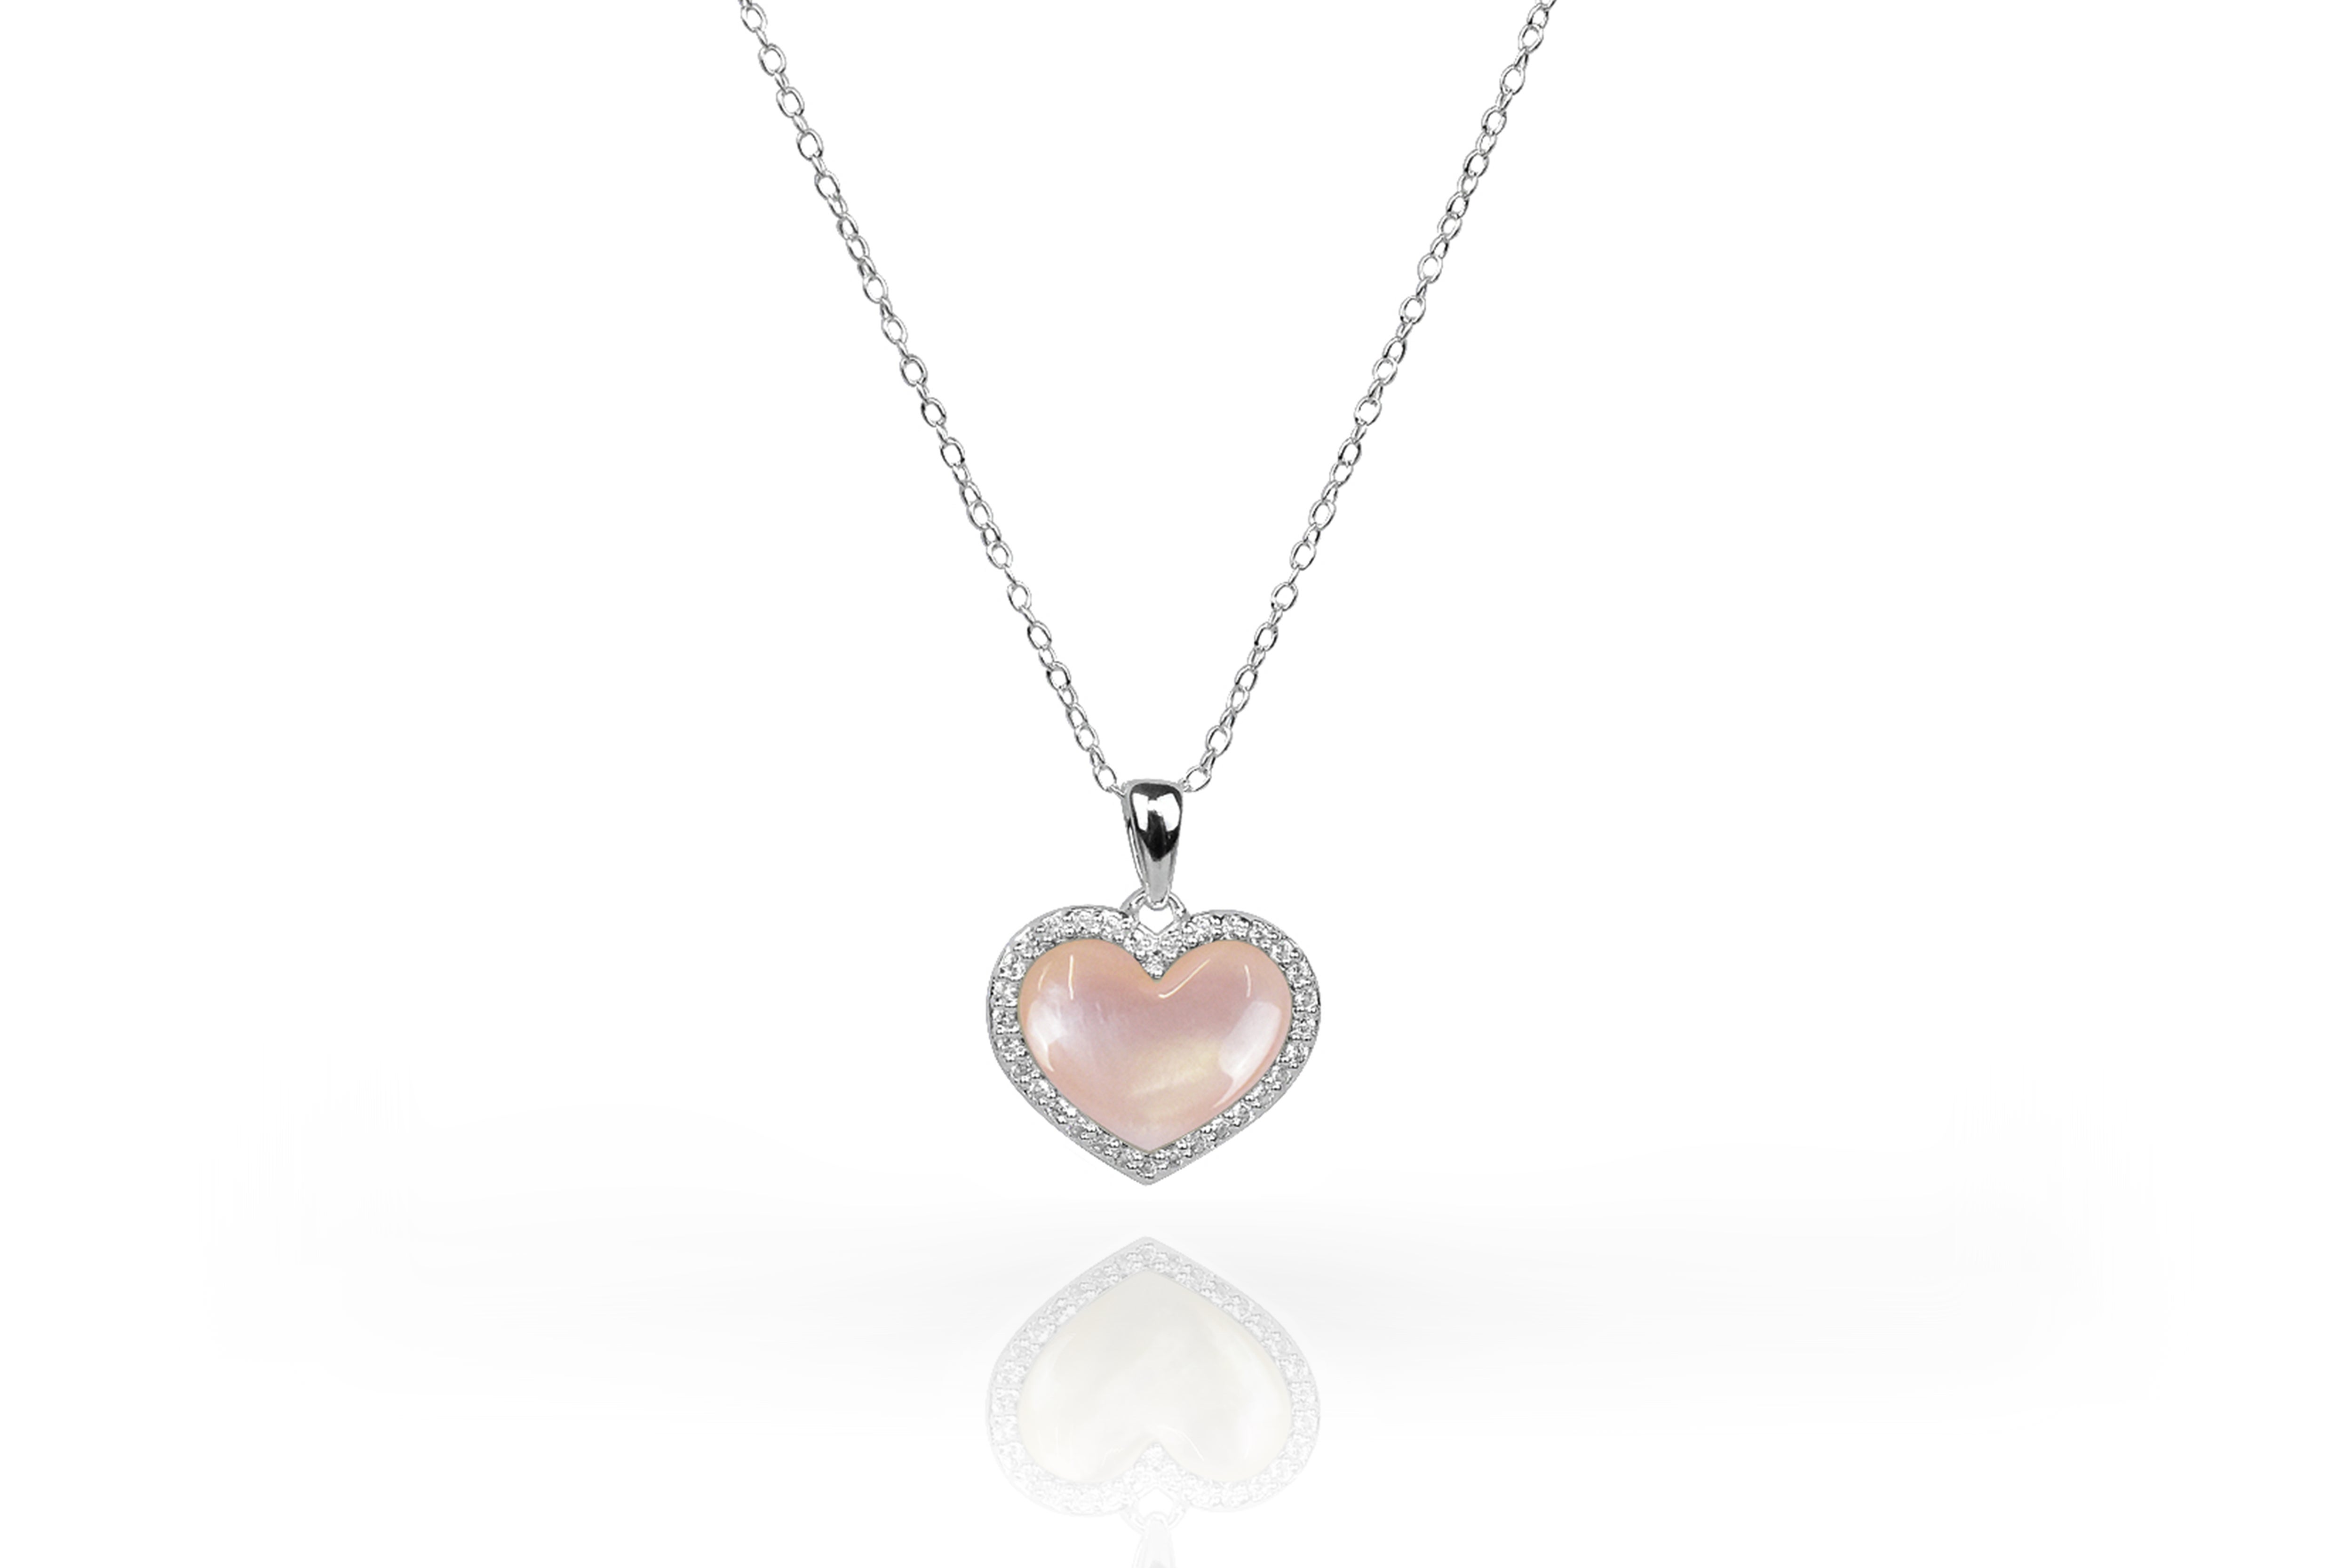 10k Gold Gemstone Heart Necklace Gemstone Options For Sale